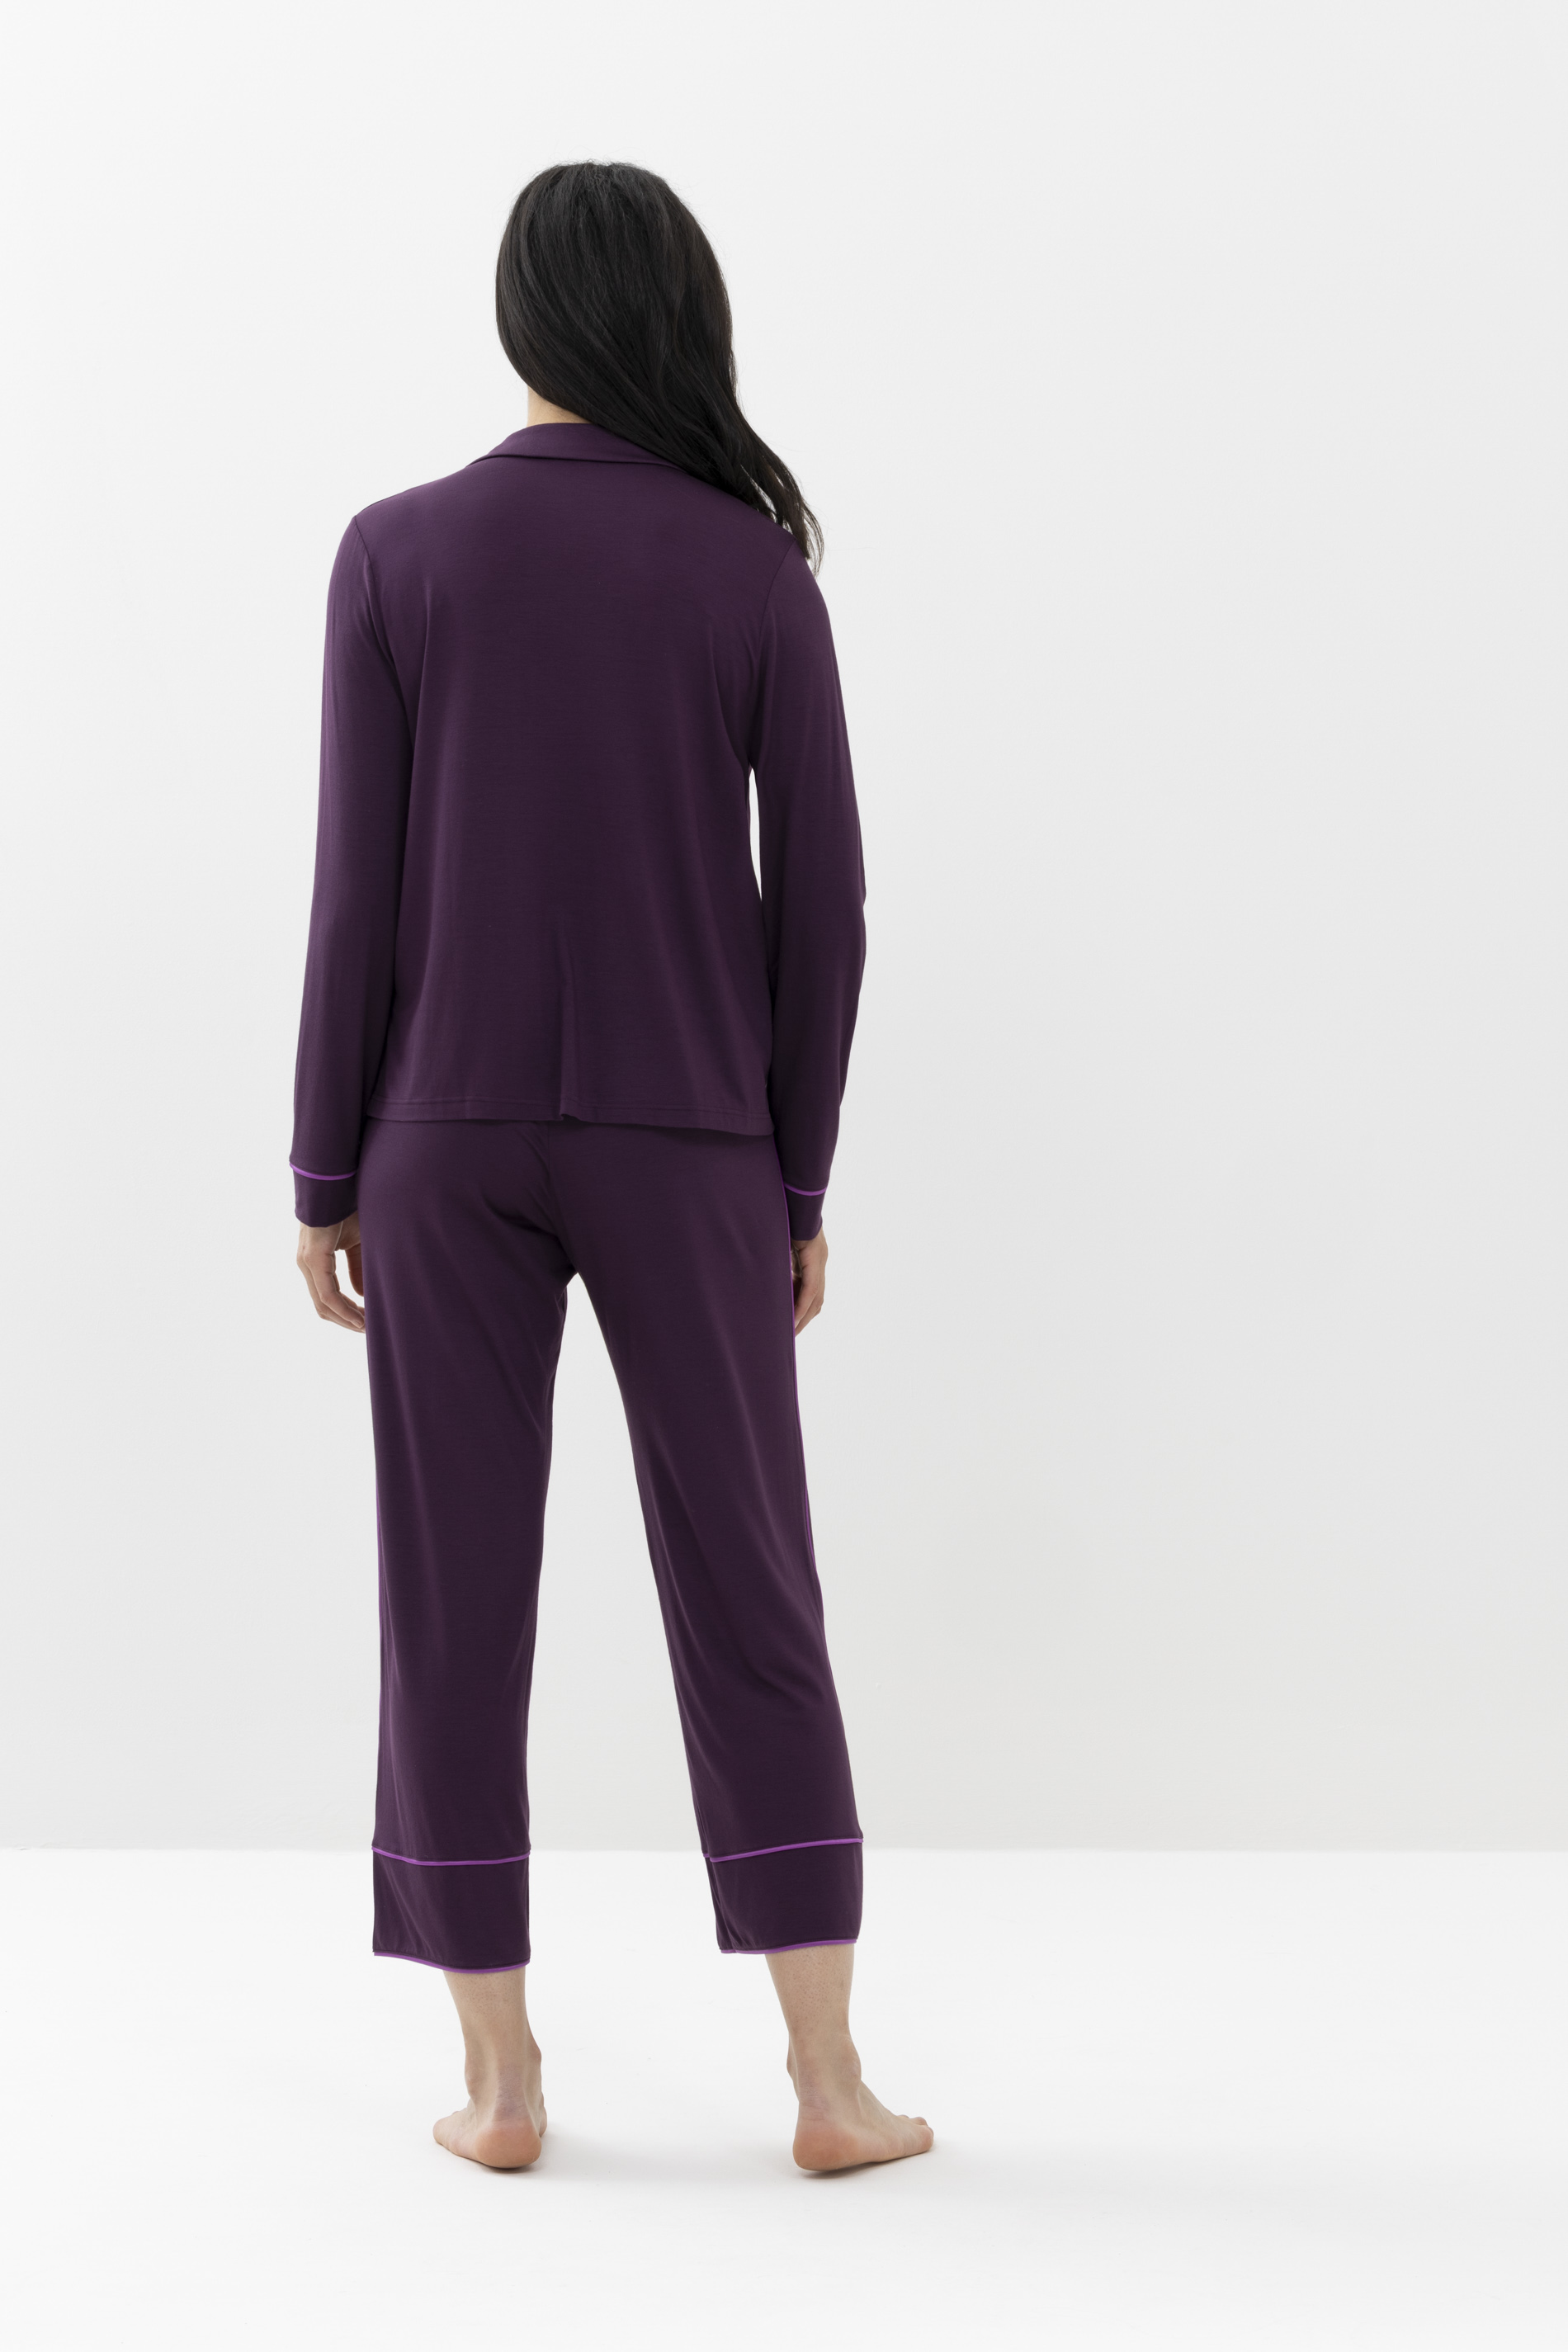 Pyjama shirt, long-sleeve Dark Plum Serie Jeane Rear View | mey®